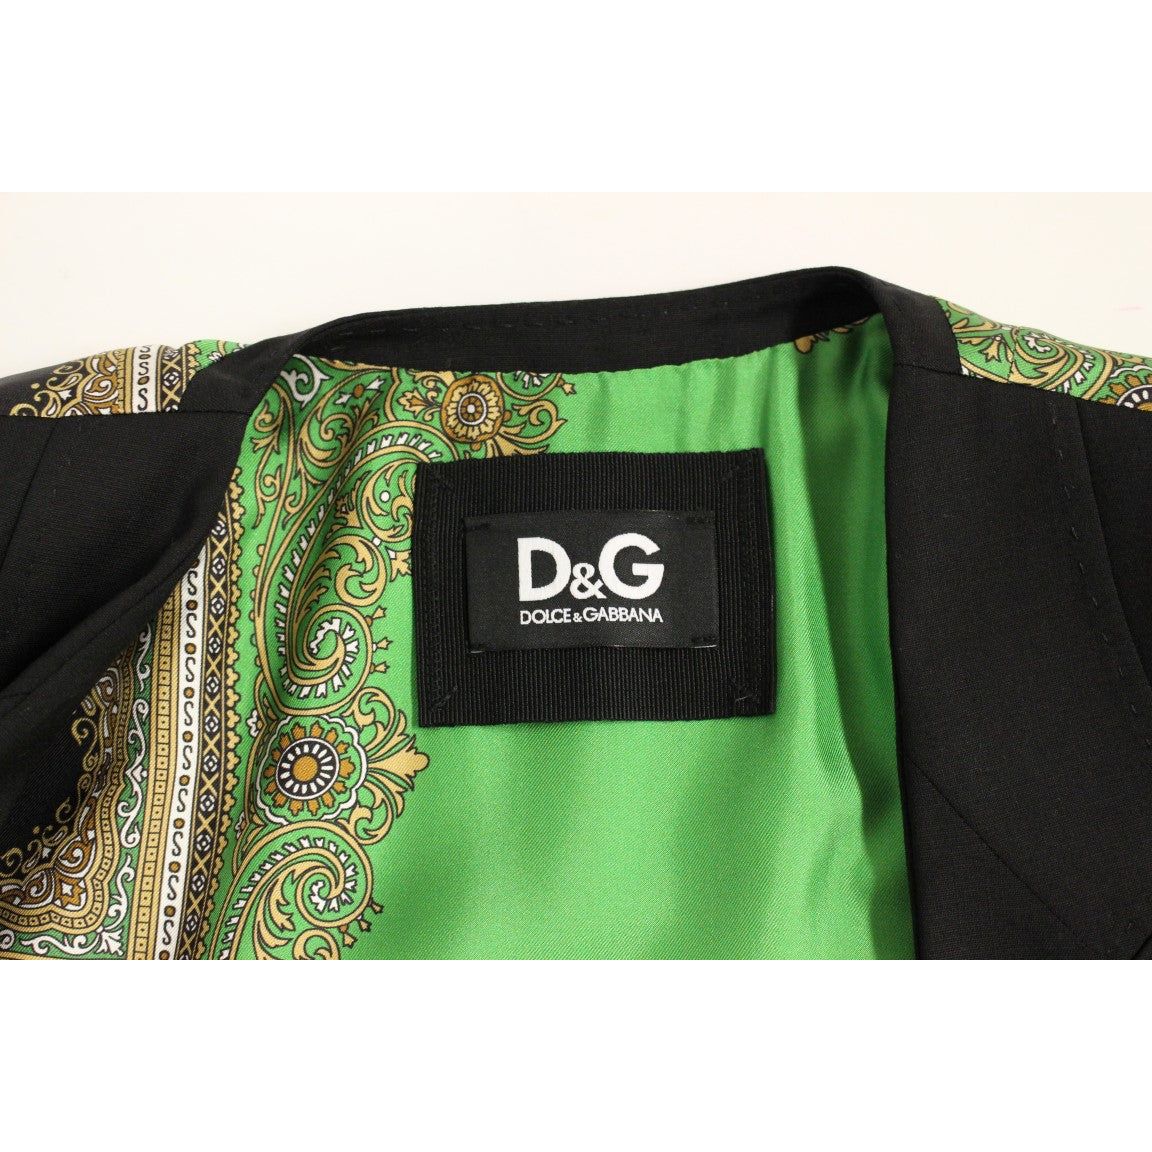 Dolce & Gabbana Elegant Silk-Blend Black Blazer with Scarf Back Detail black-silk-scarf-back-blazer-jacket Blazer jacket 217019-black-silk-scarf-back-blazer-jacket-7.jpg